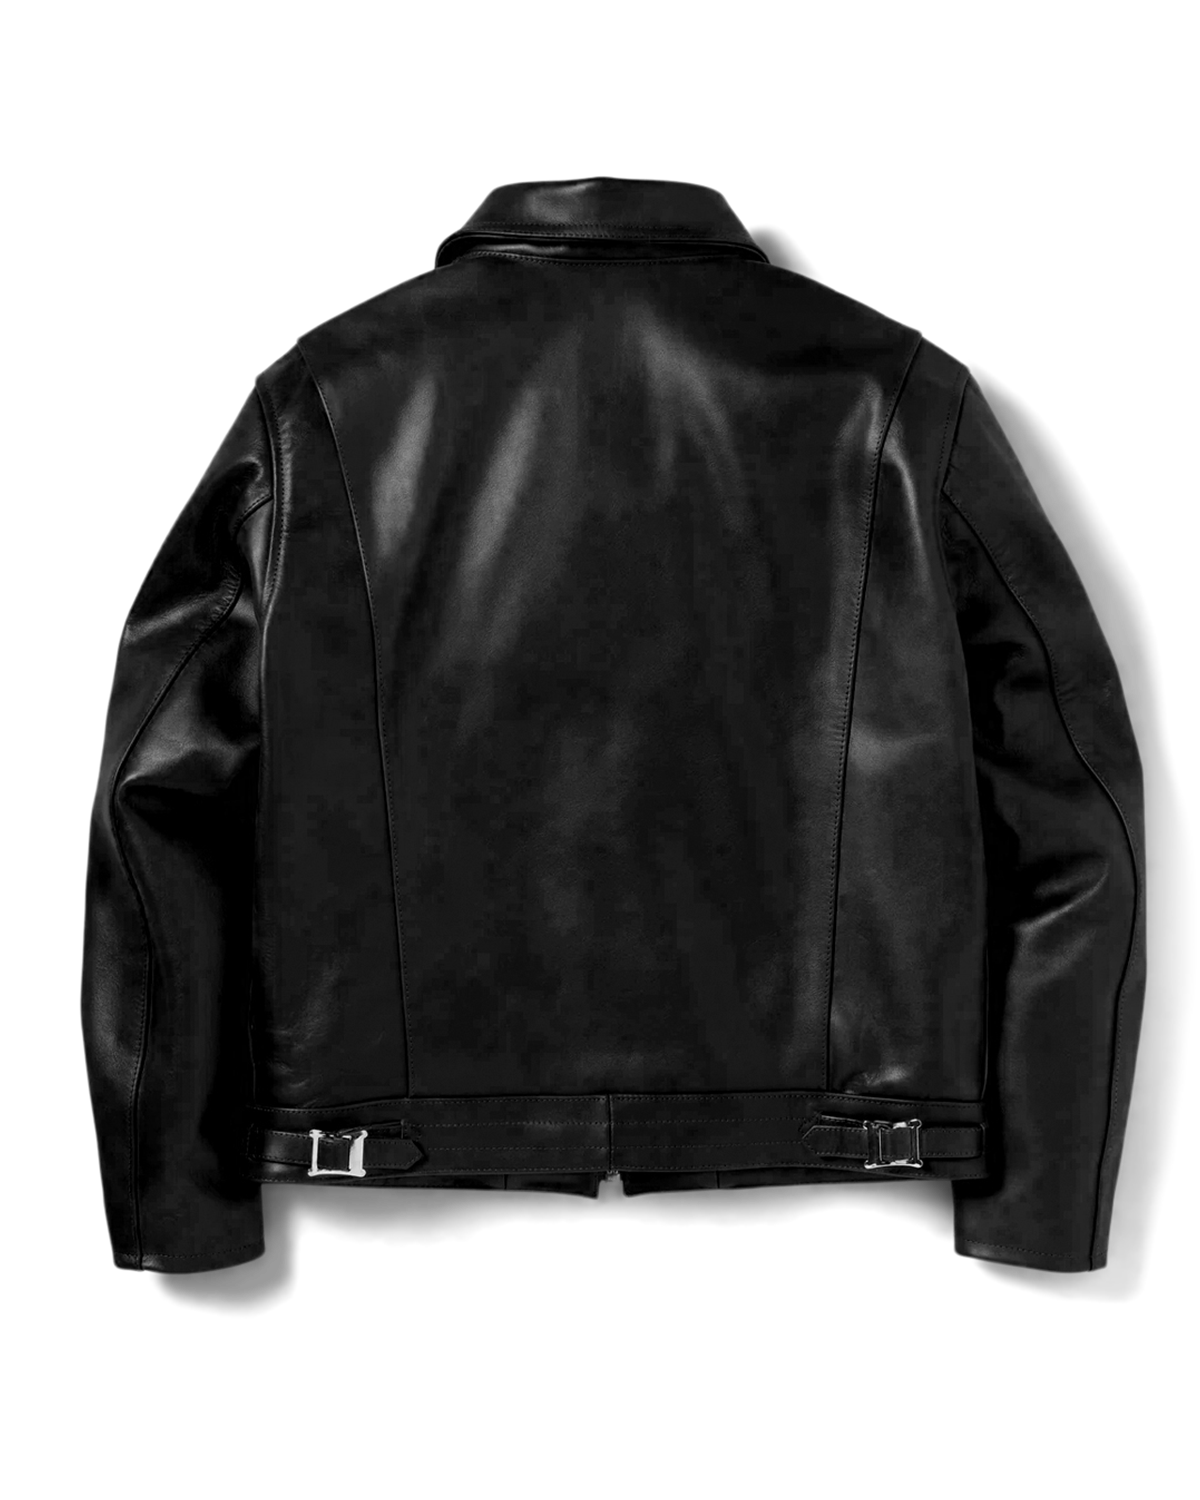 Single Leather Jacket Neighborhood Outerwear Leather Jackets Black